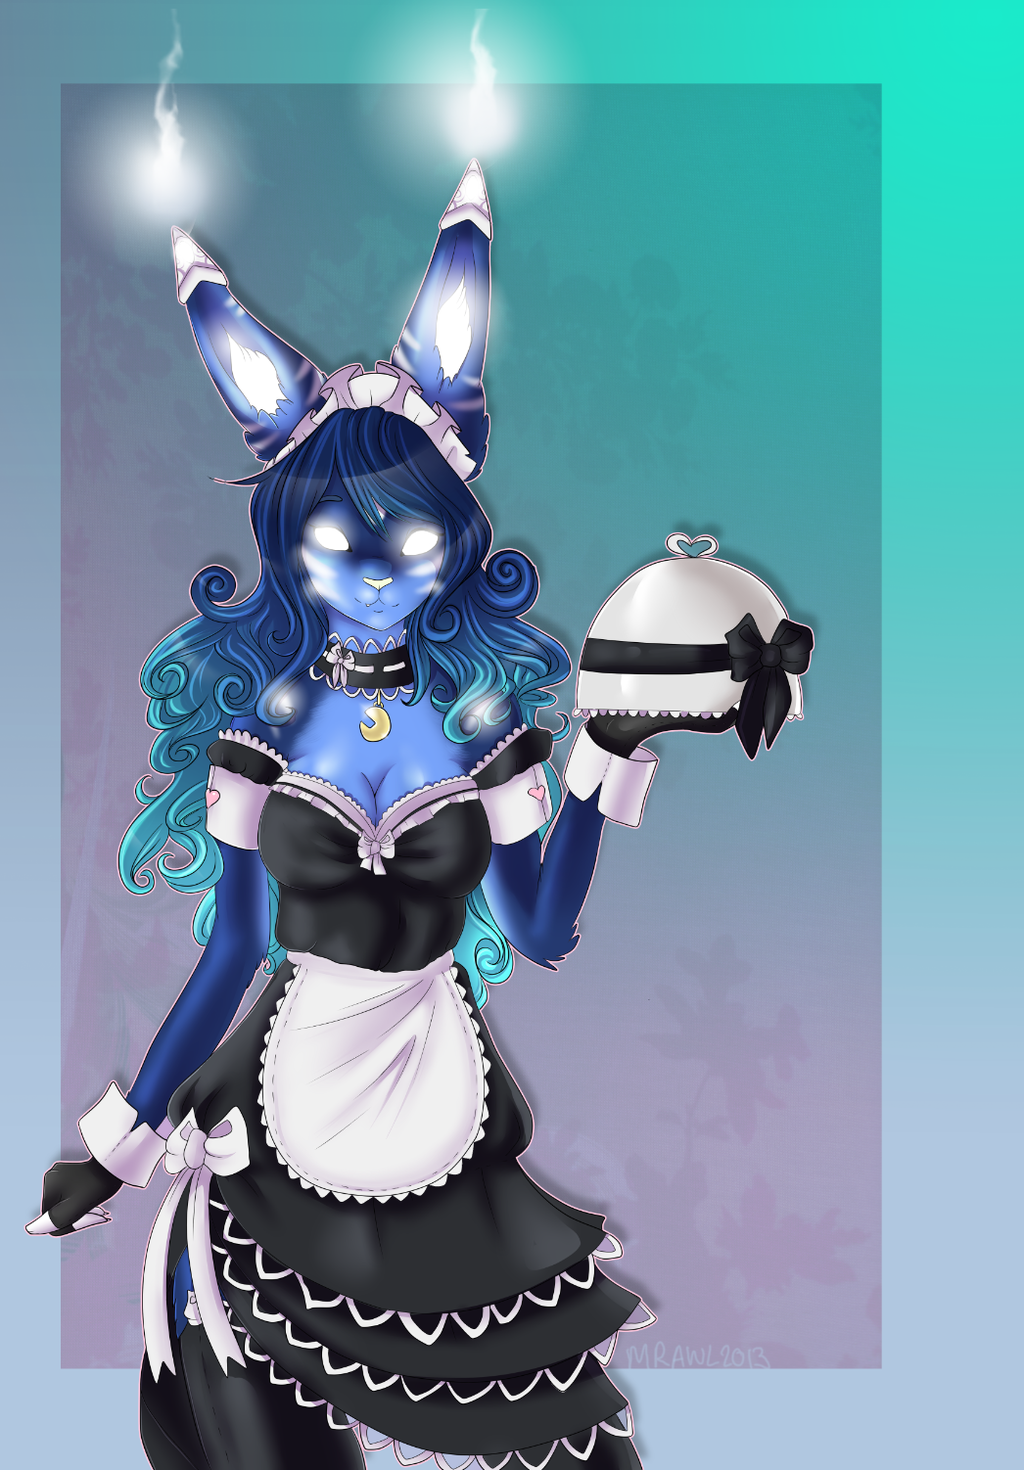 Moonblossom maid